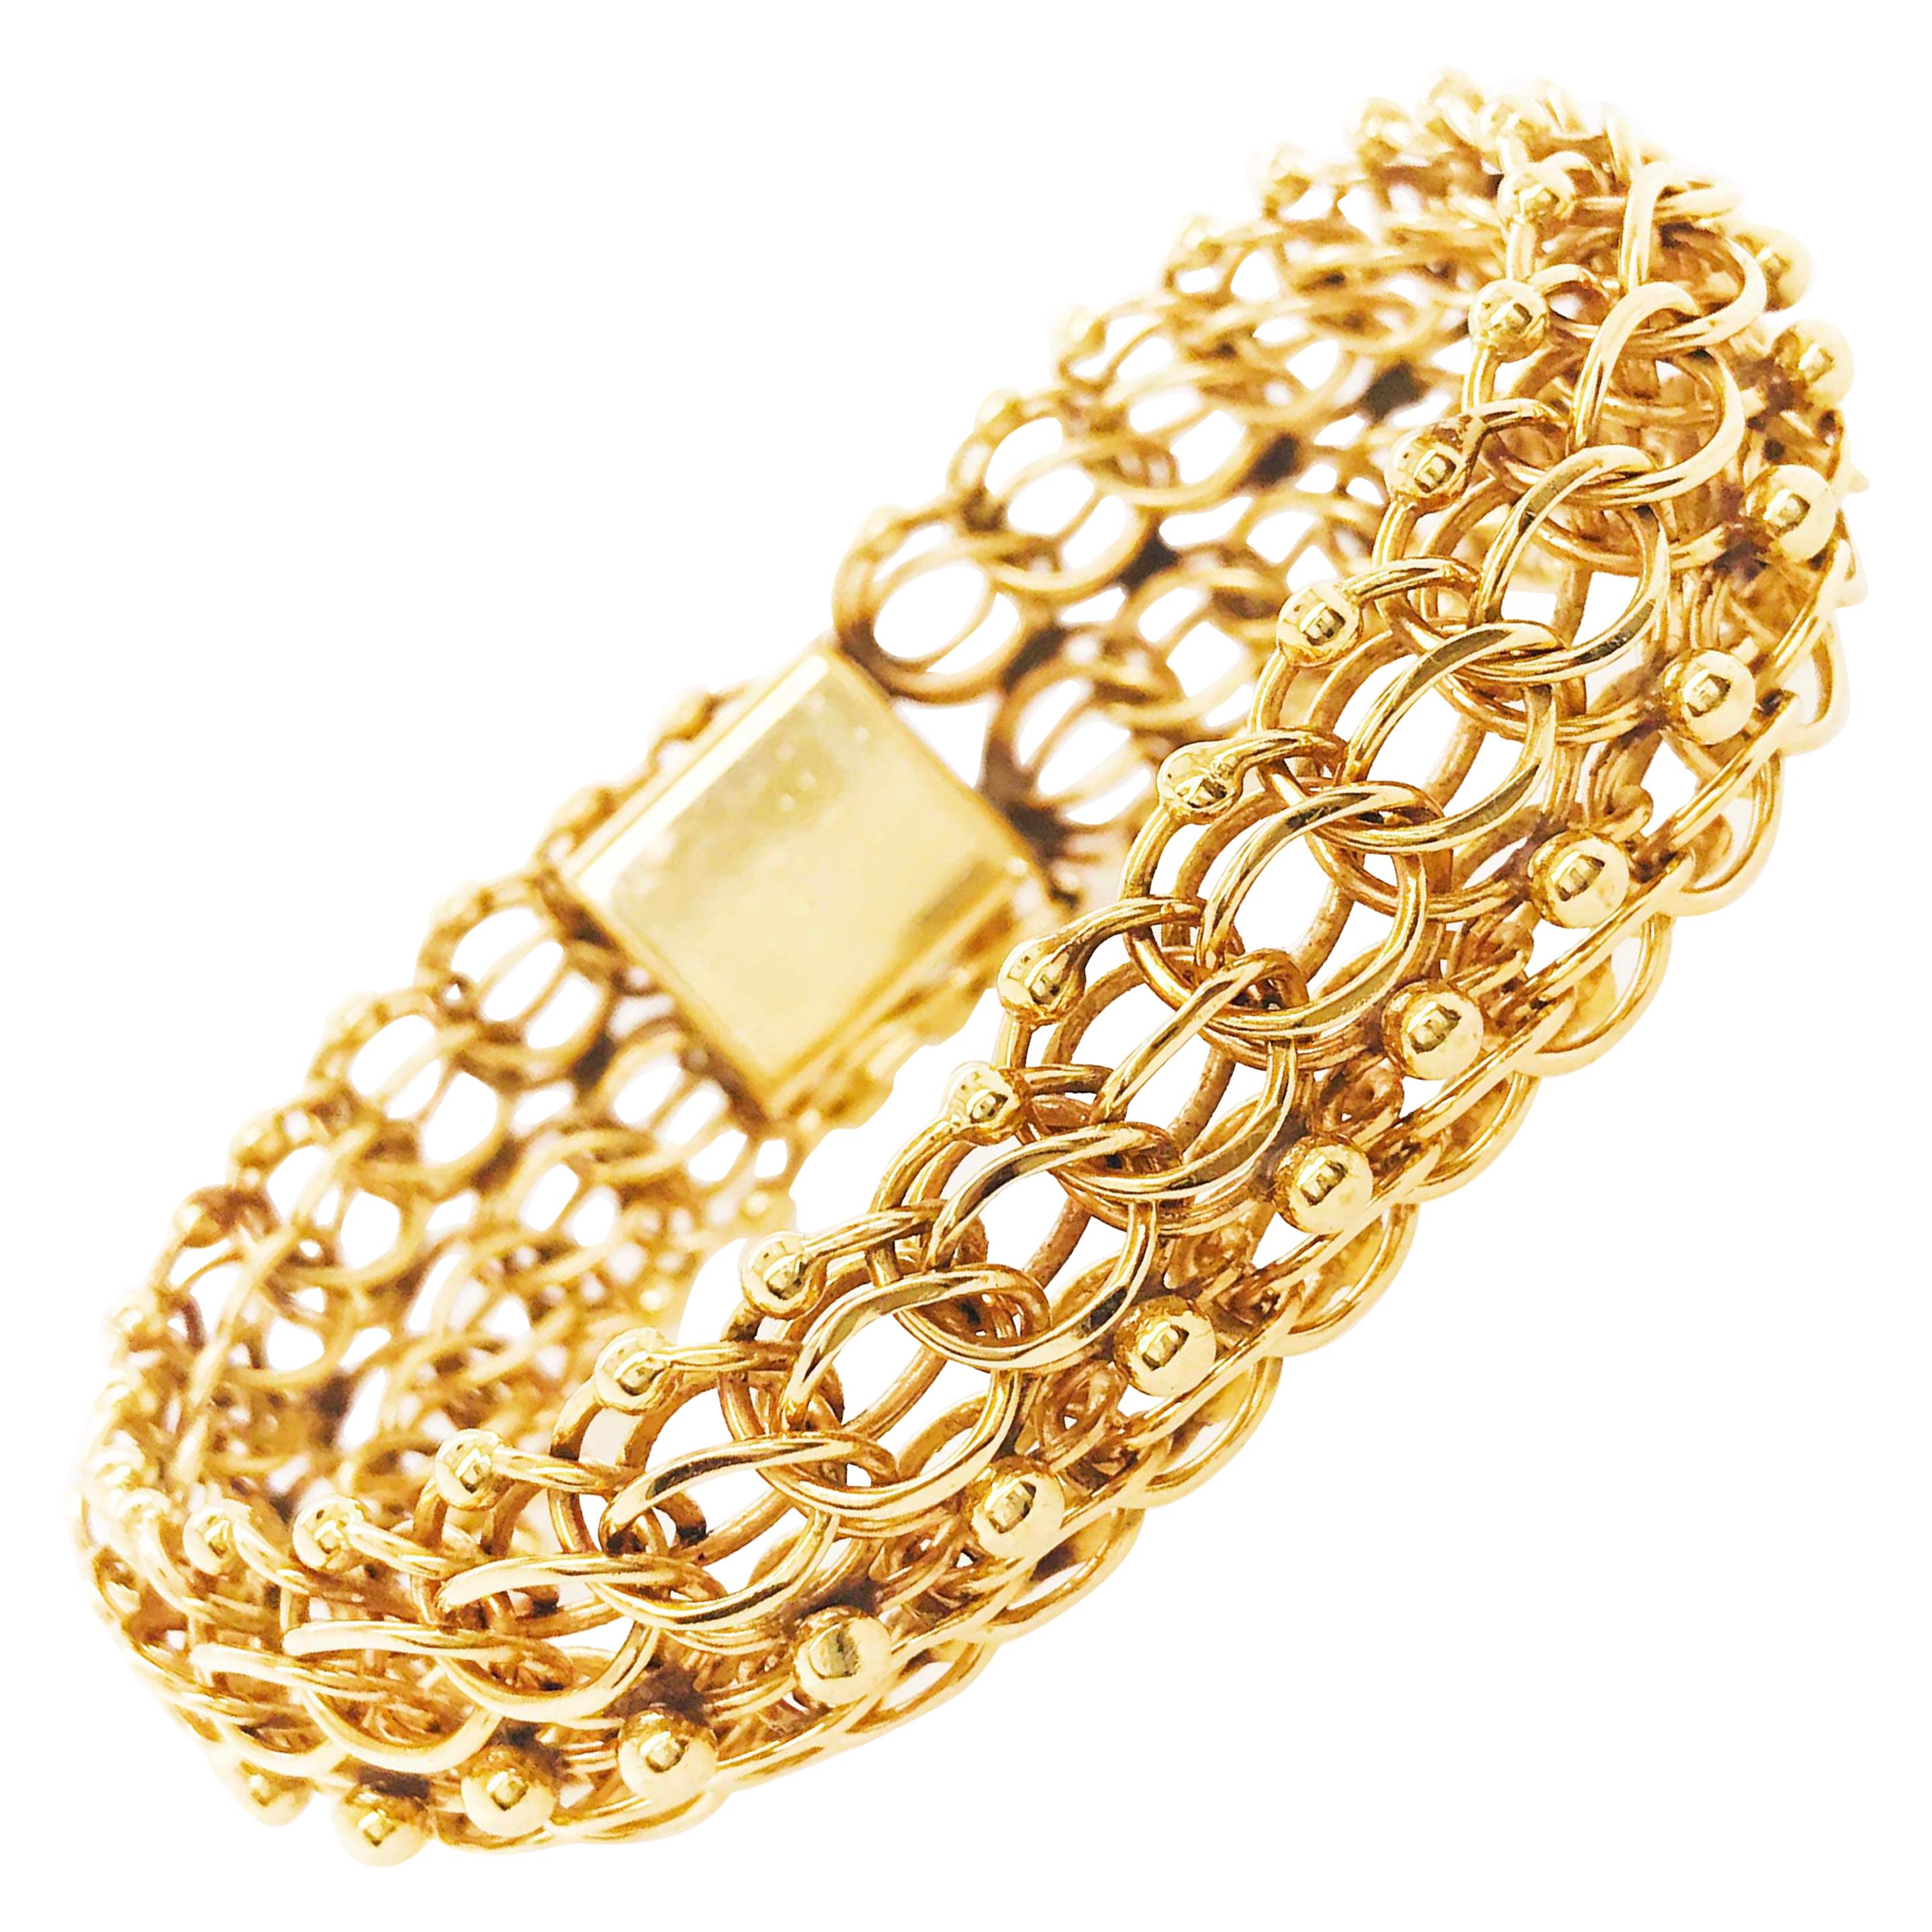 Large Gold Charm Bracelet, Bracelet with Custom Links in 14 Karat Gold